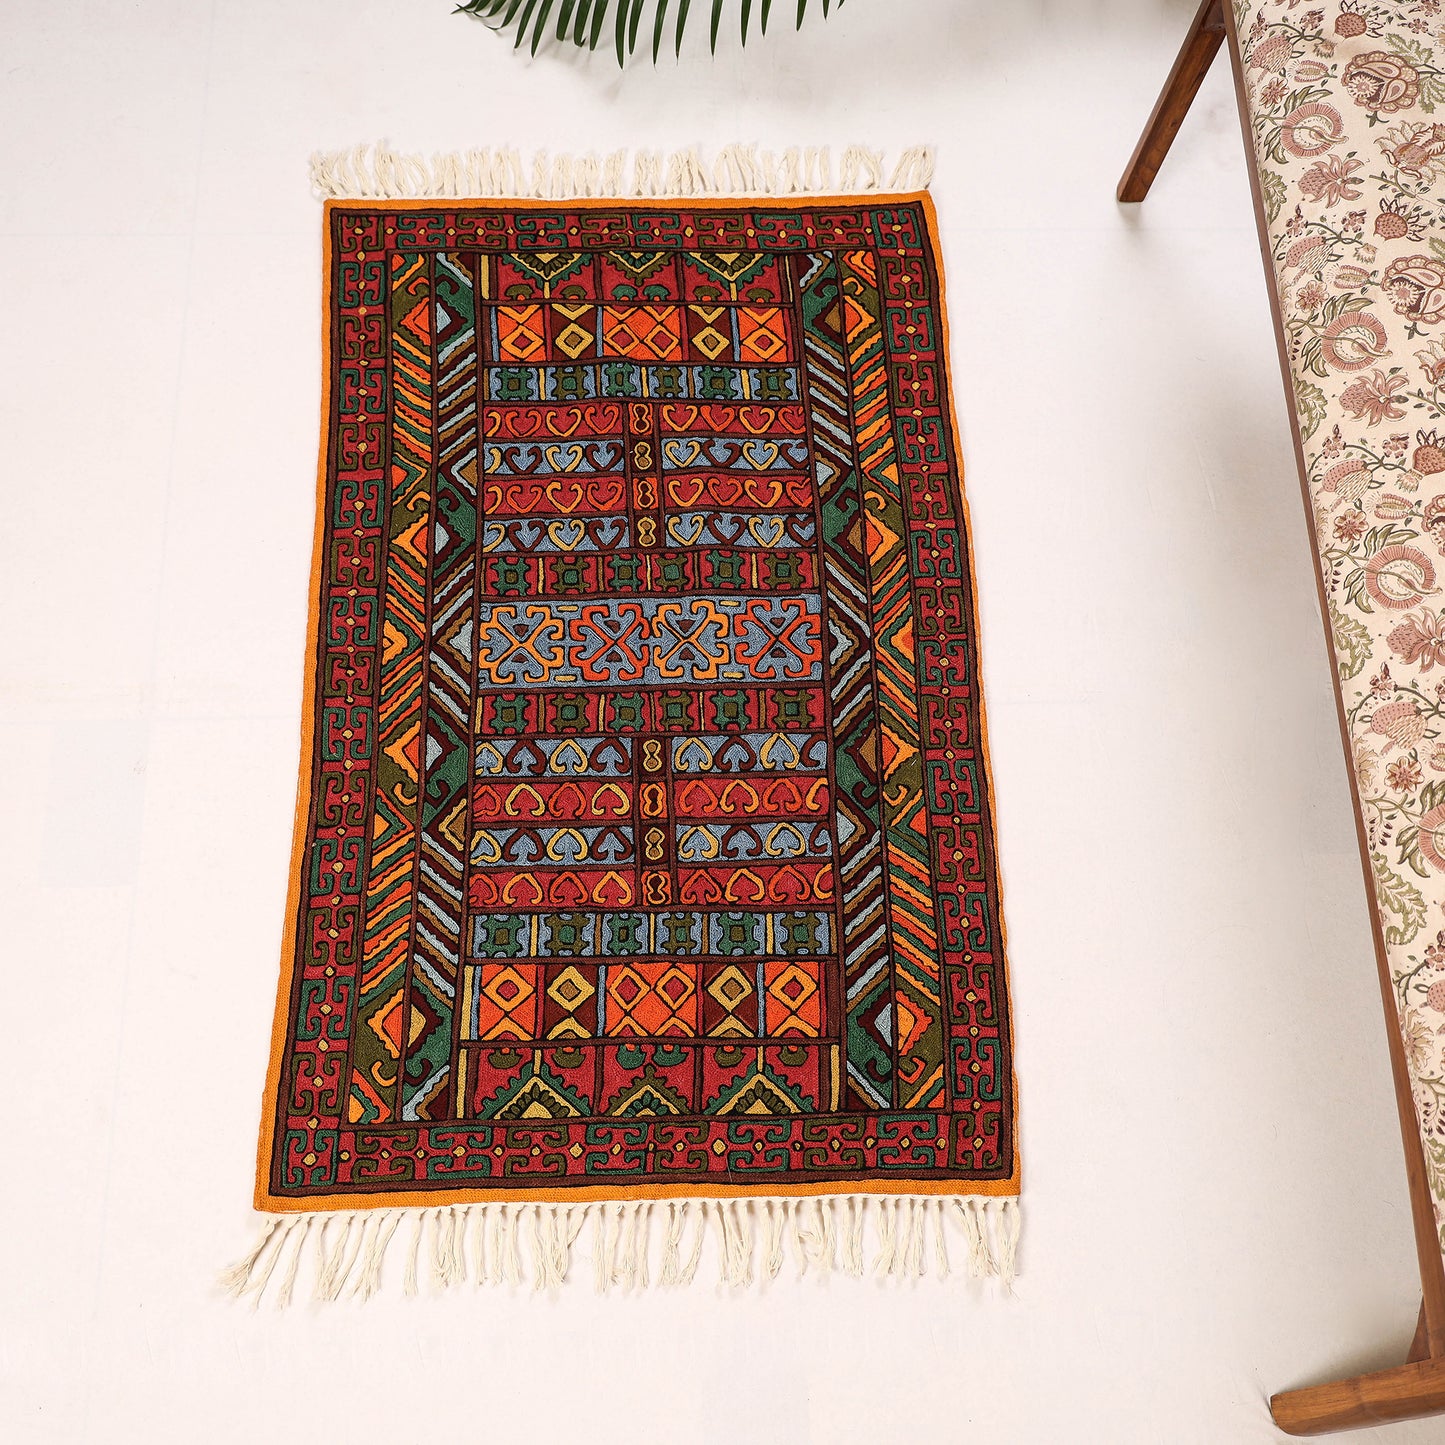 Original Chain Stitch Crewel Wool Thread Hand Embroidery Rug / Carpet (47 x 29 in)